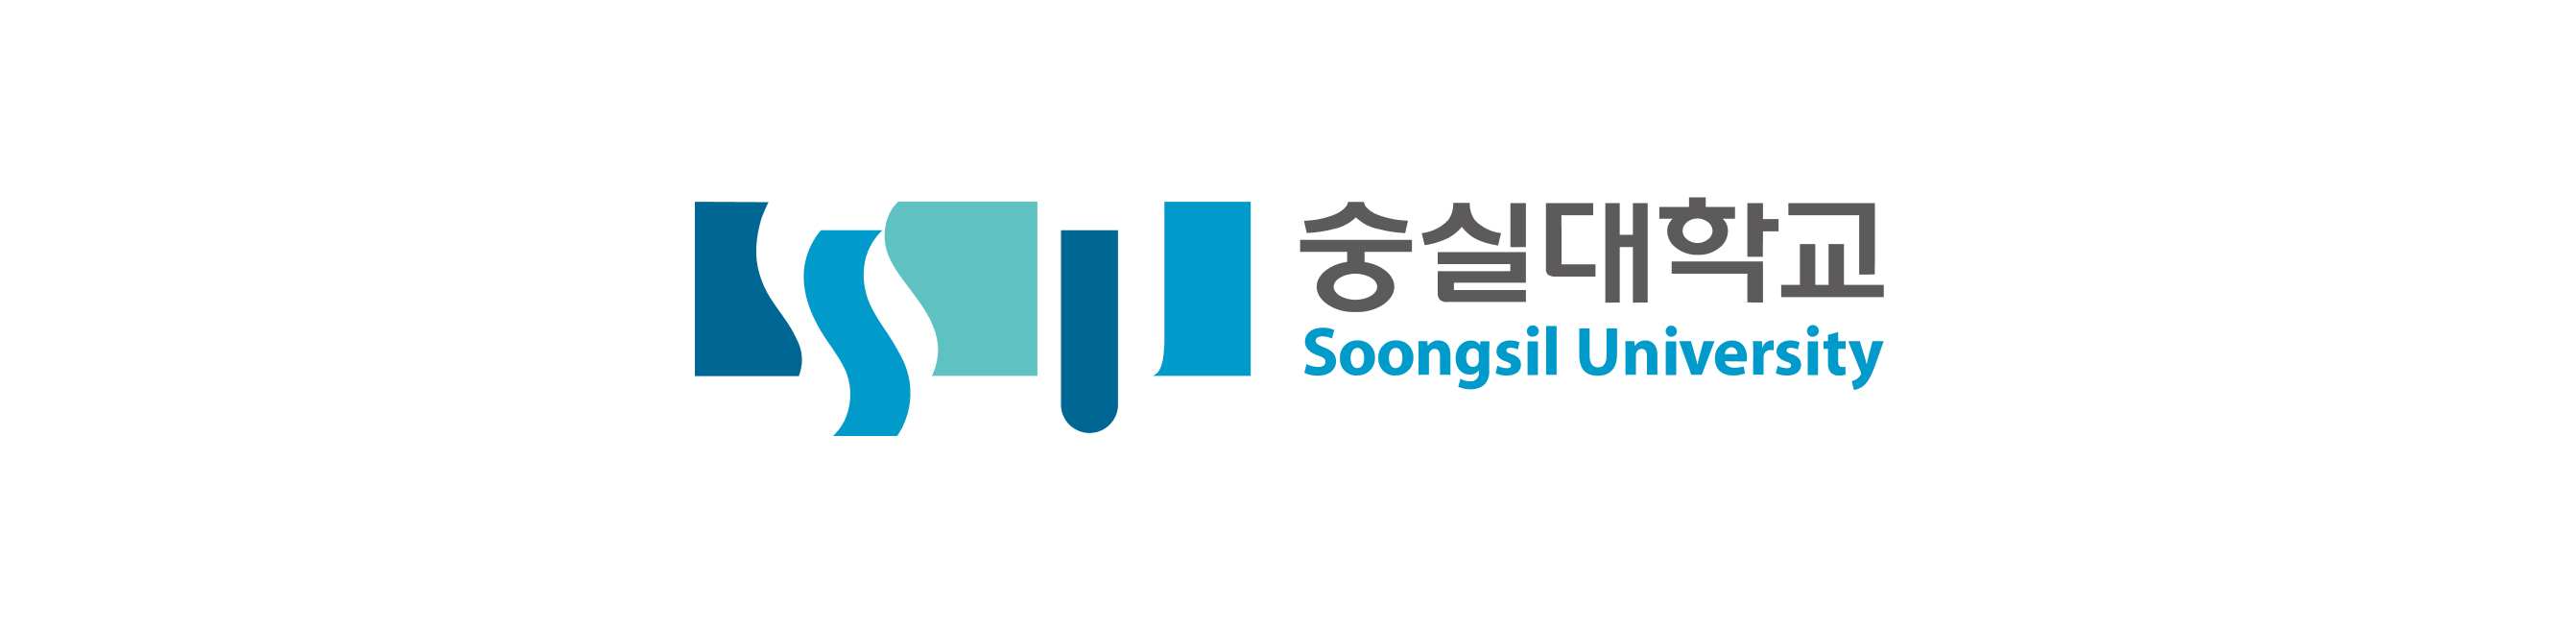 soongsil_university